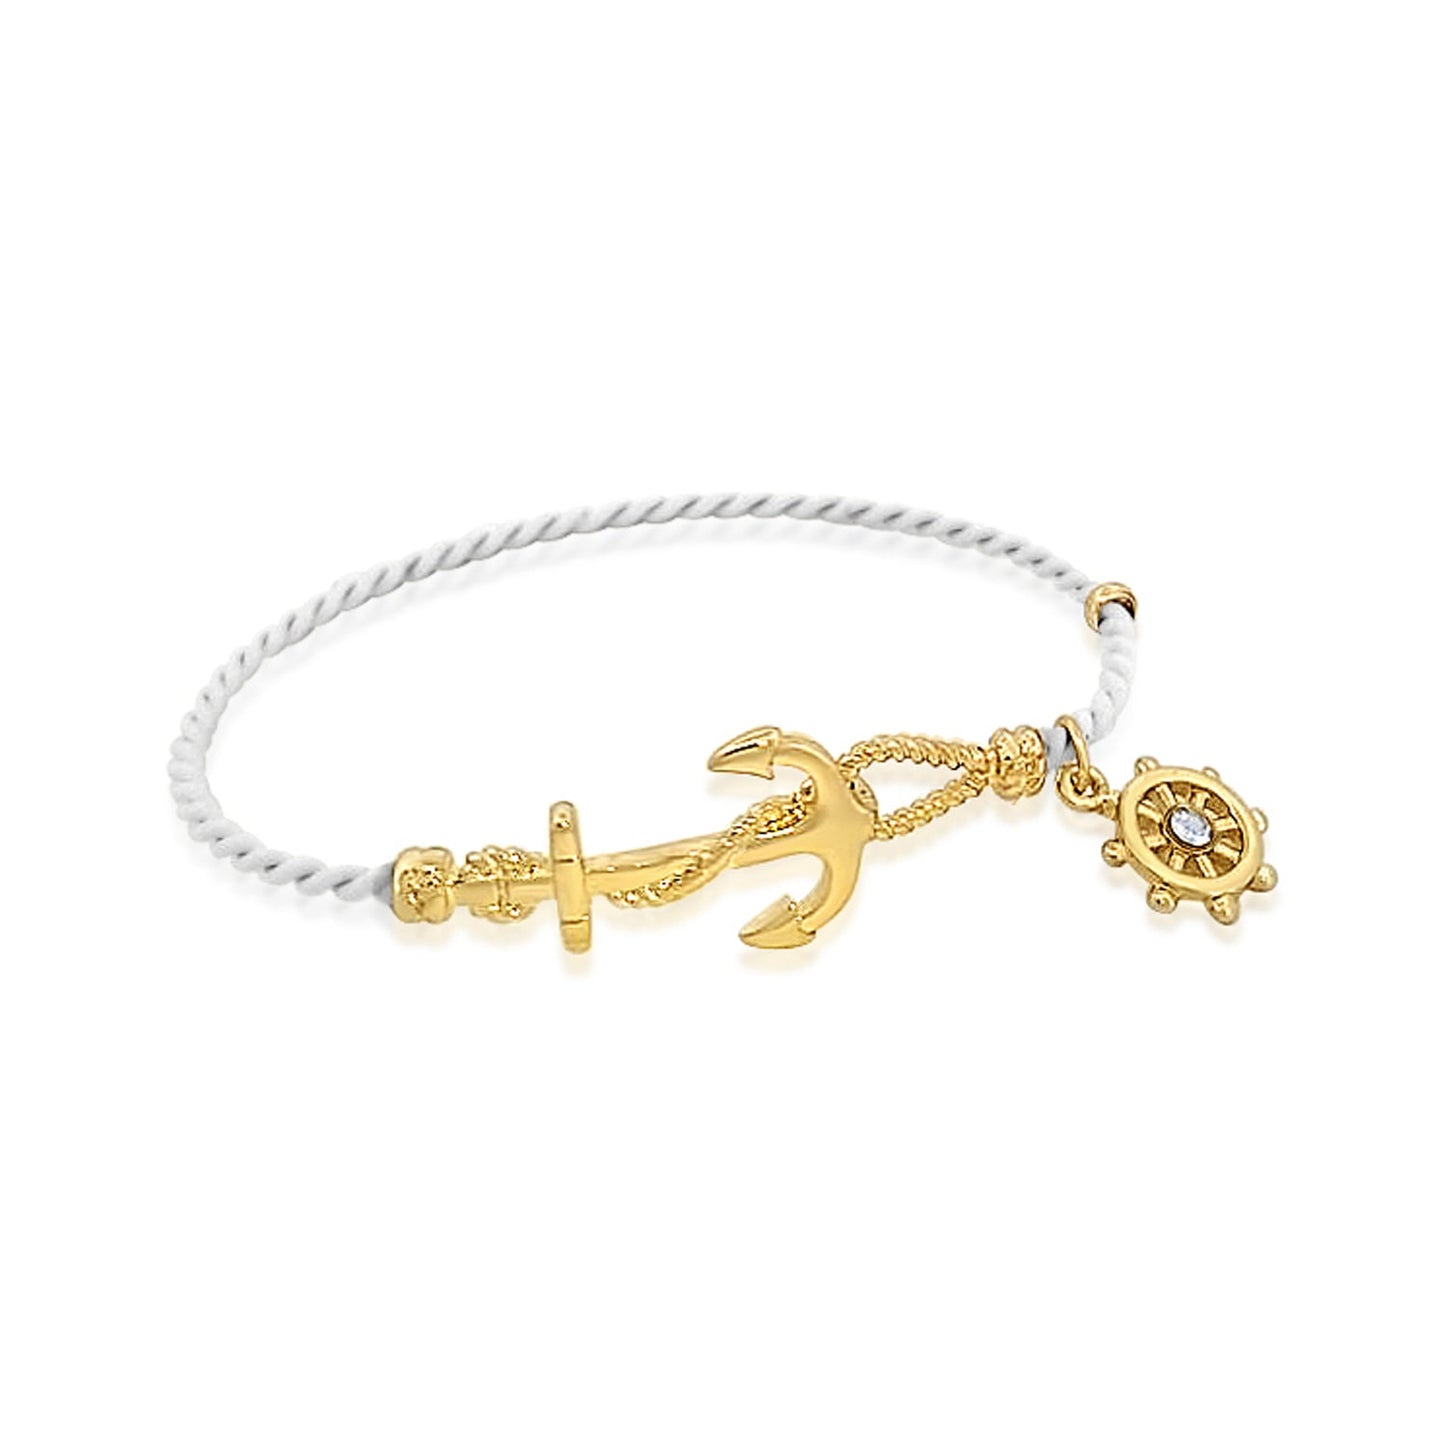 BESHEEK Goldtone and White Anchor and Hook Clasp Bracelet| Handmade Hypoallergenic Boho Beach Gala Wedding Style Jewelry